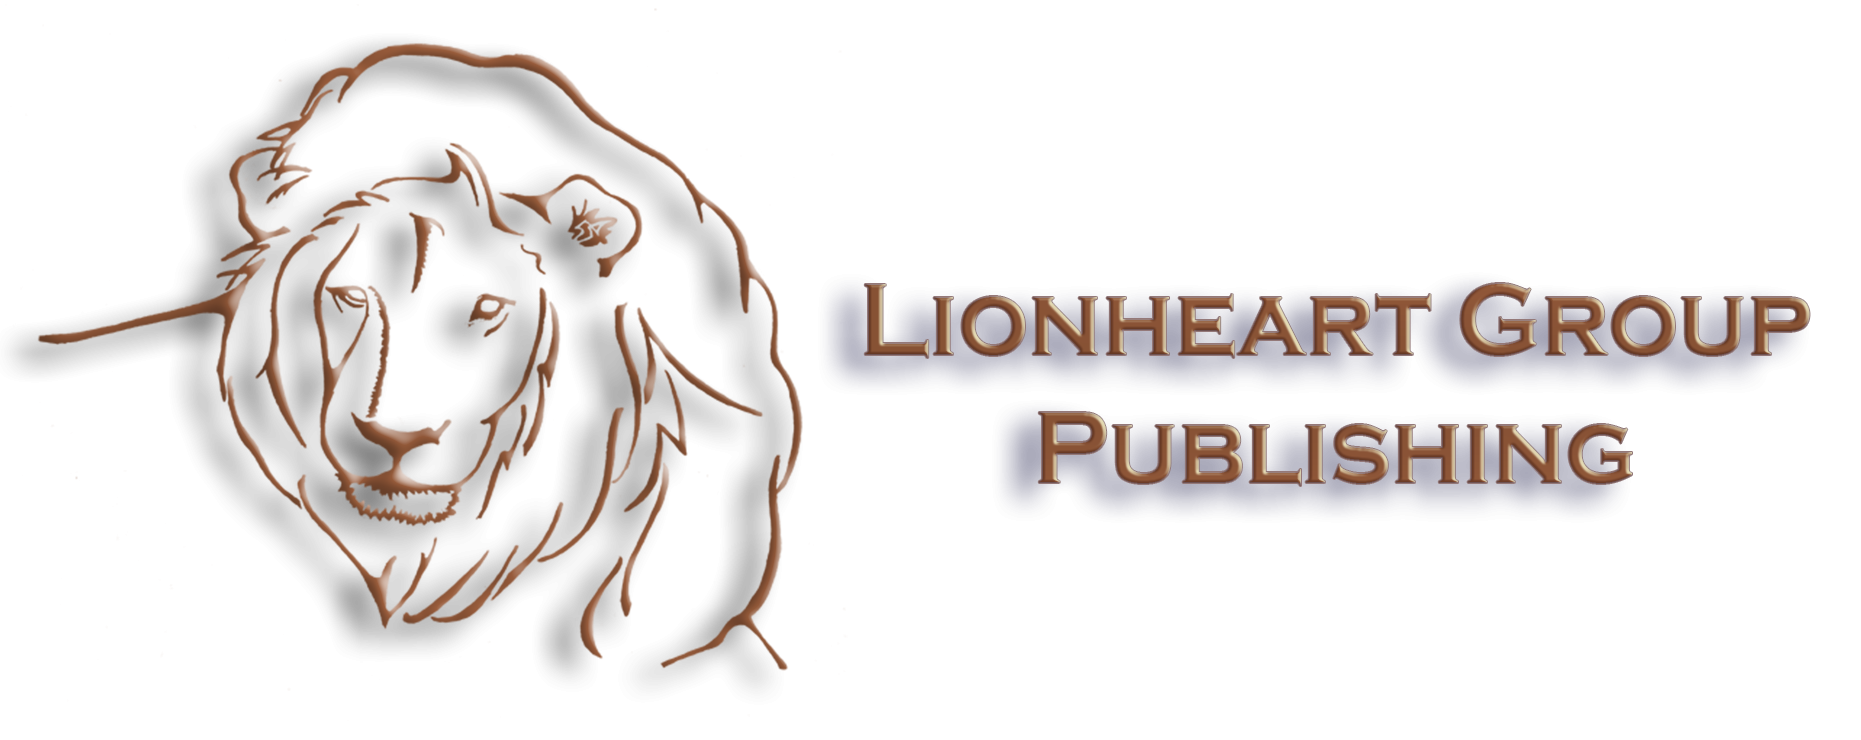 Lionheart Group Publishing | Timeless Treasures